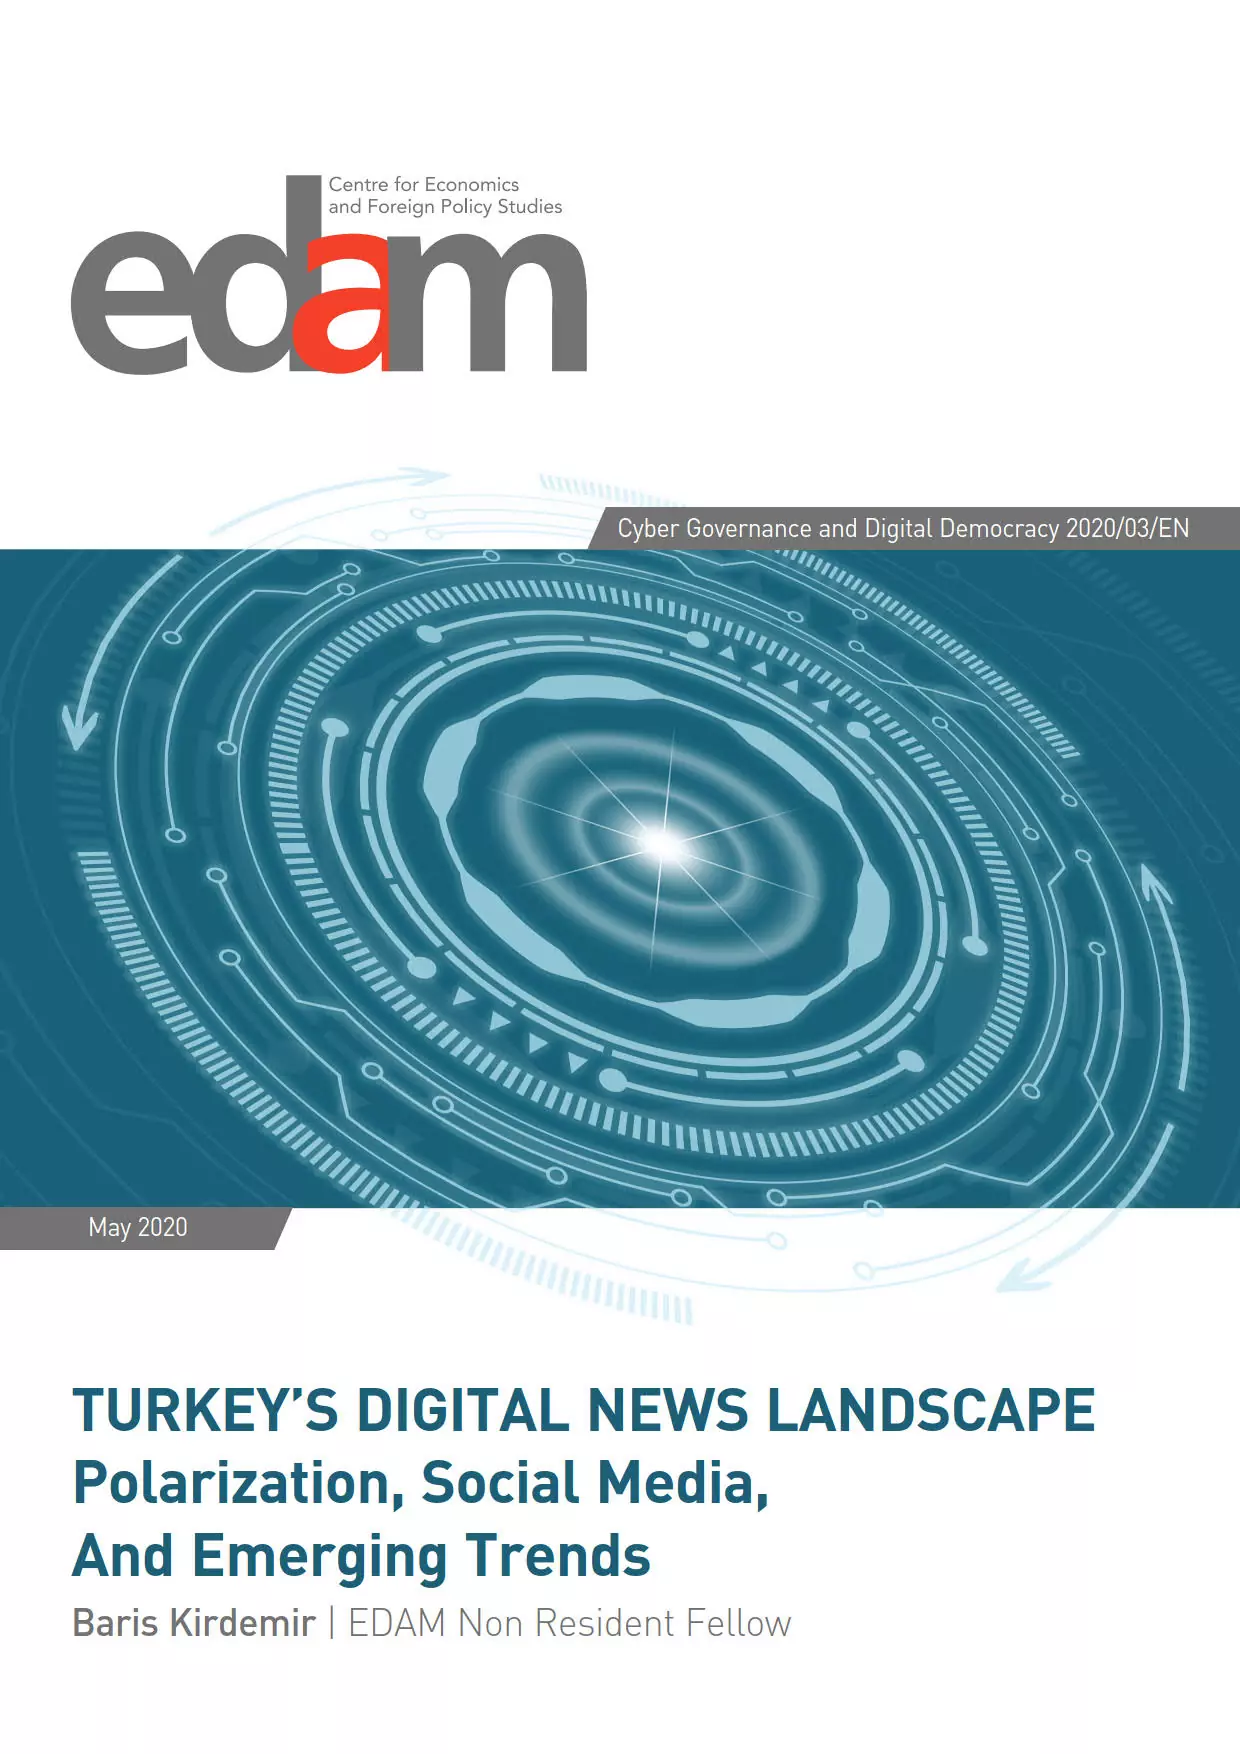 Turkey’s Digital News Landscape: Polarization, Social Media and Emerging Trends